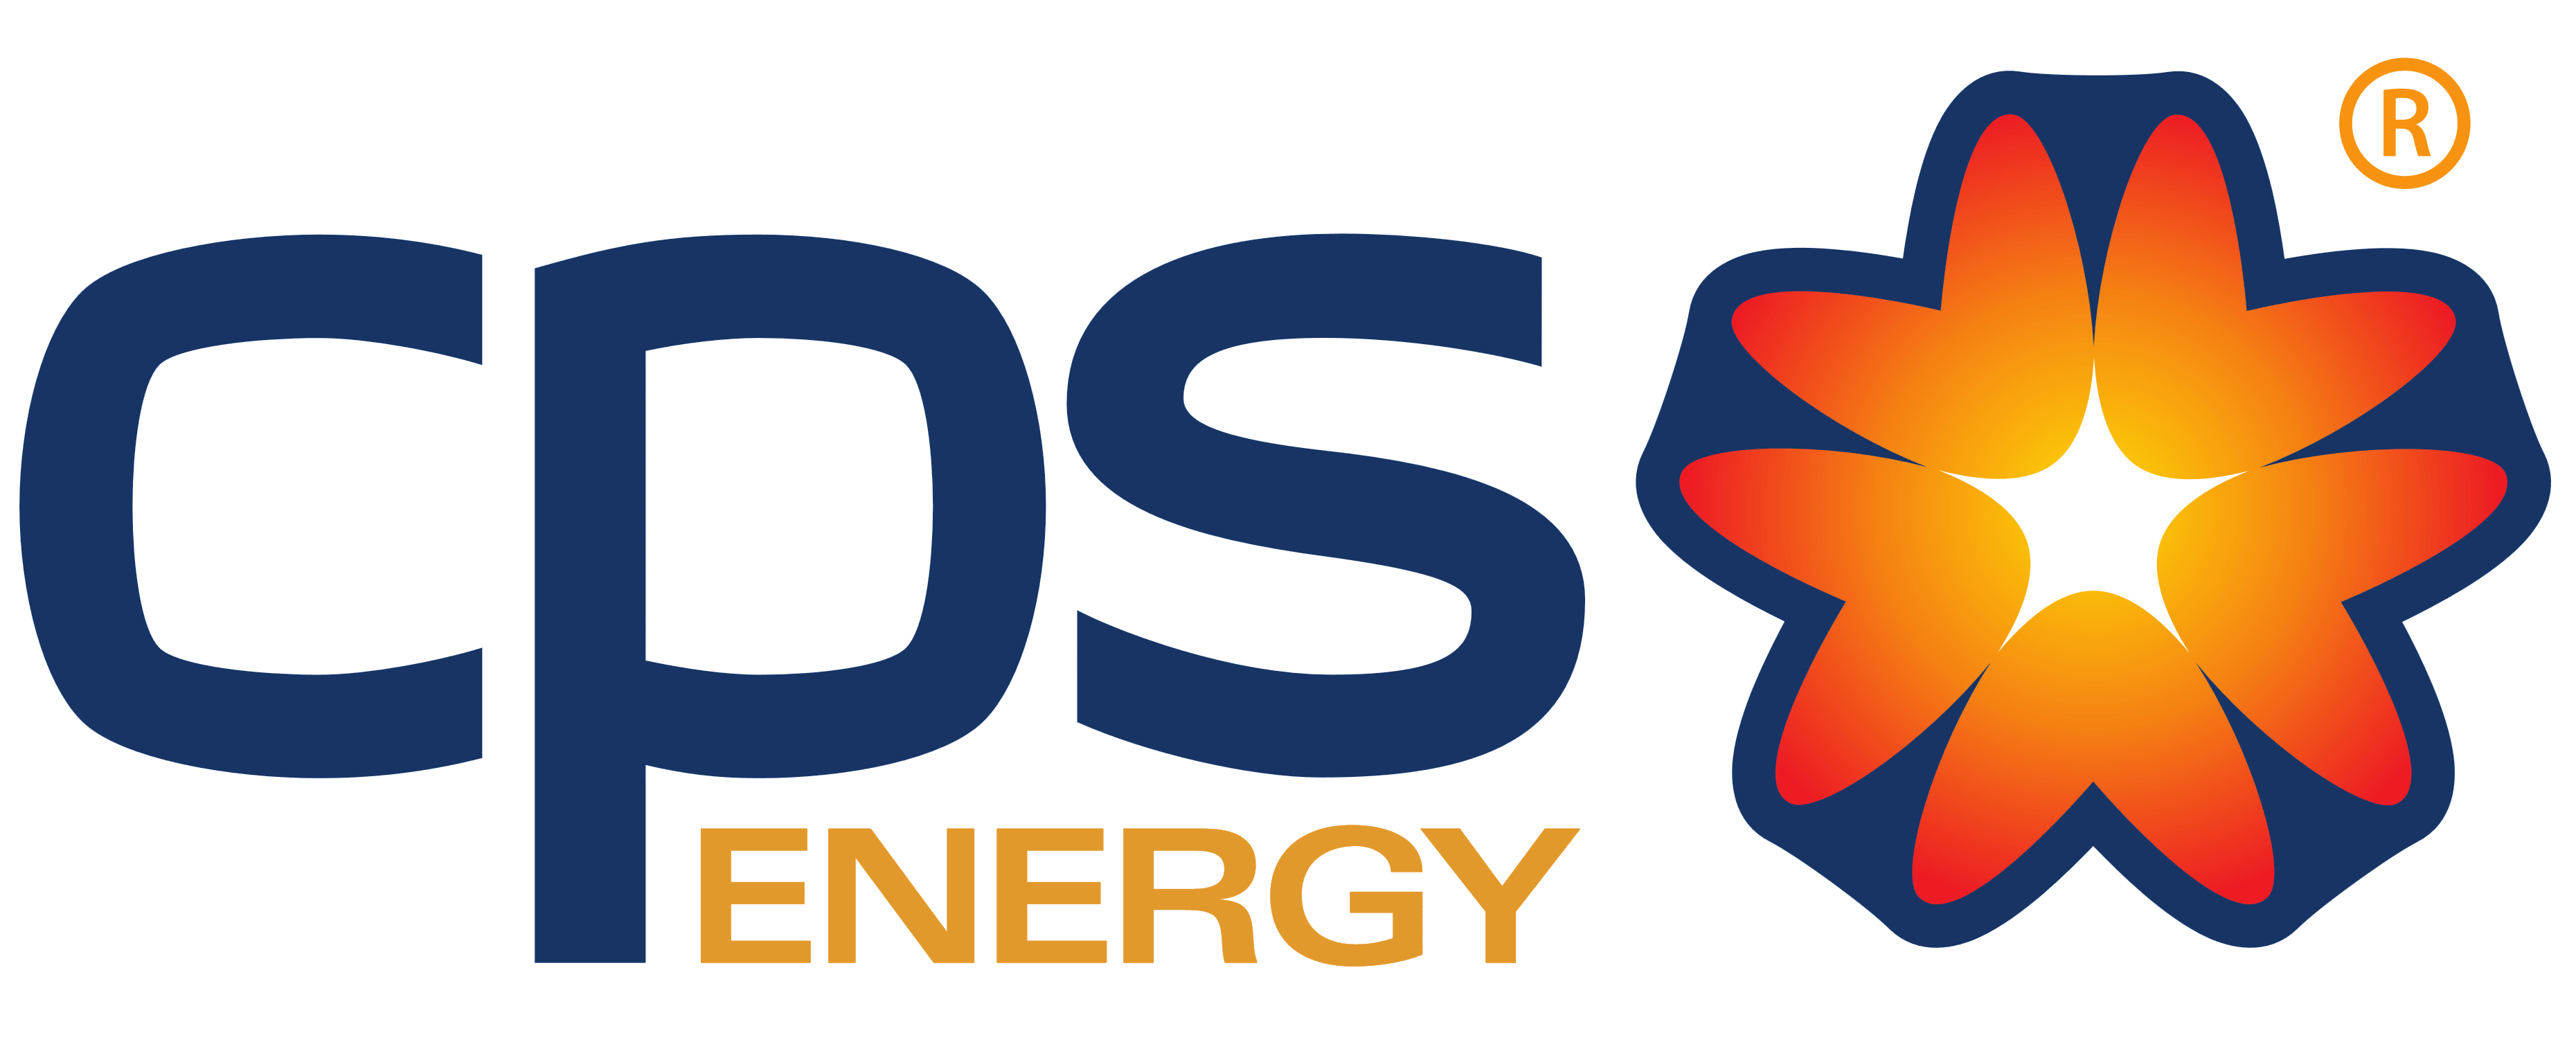 CPS Energy logo, logotype